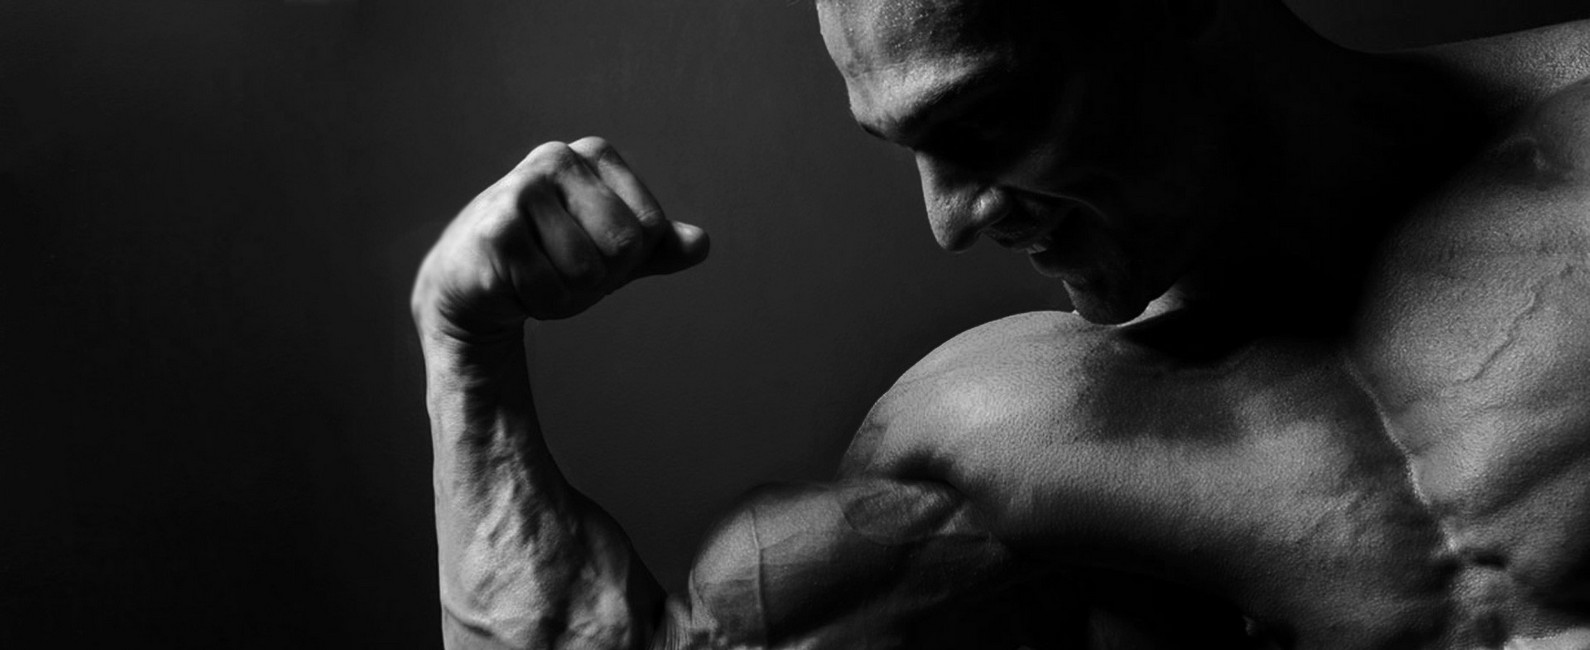 %e6%9c%aa%e5%88%86%e9%a1%9e - - Anabolic steroids in dubai, anabolic gym